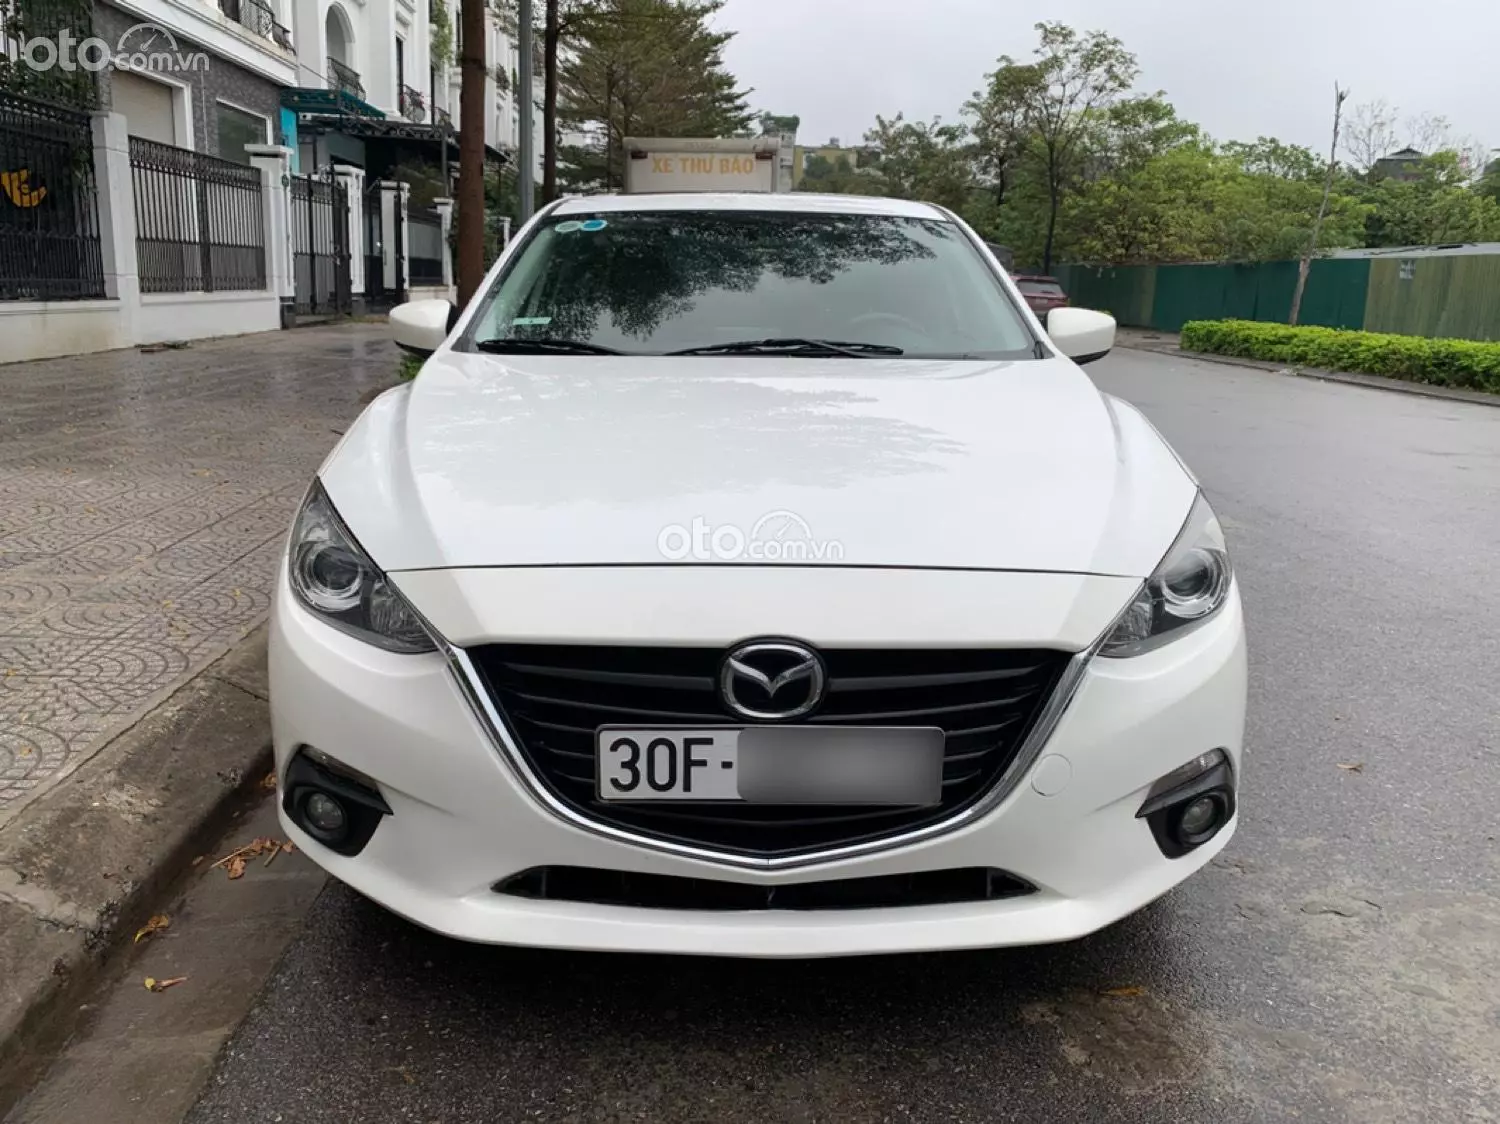 Mua bán Mazda 3 1.5L Sedan 2015 giá 388 triệu - 22960754